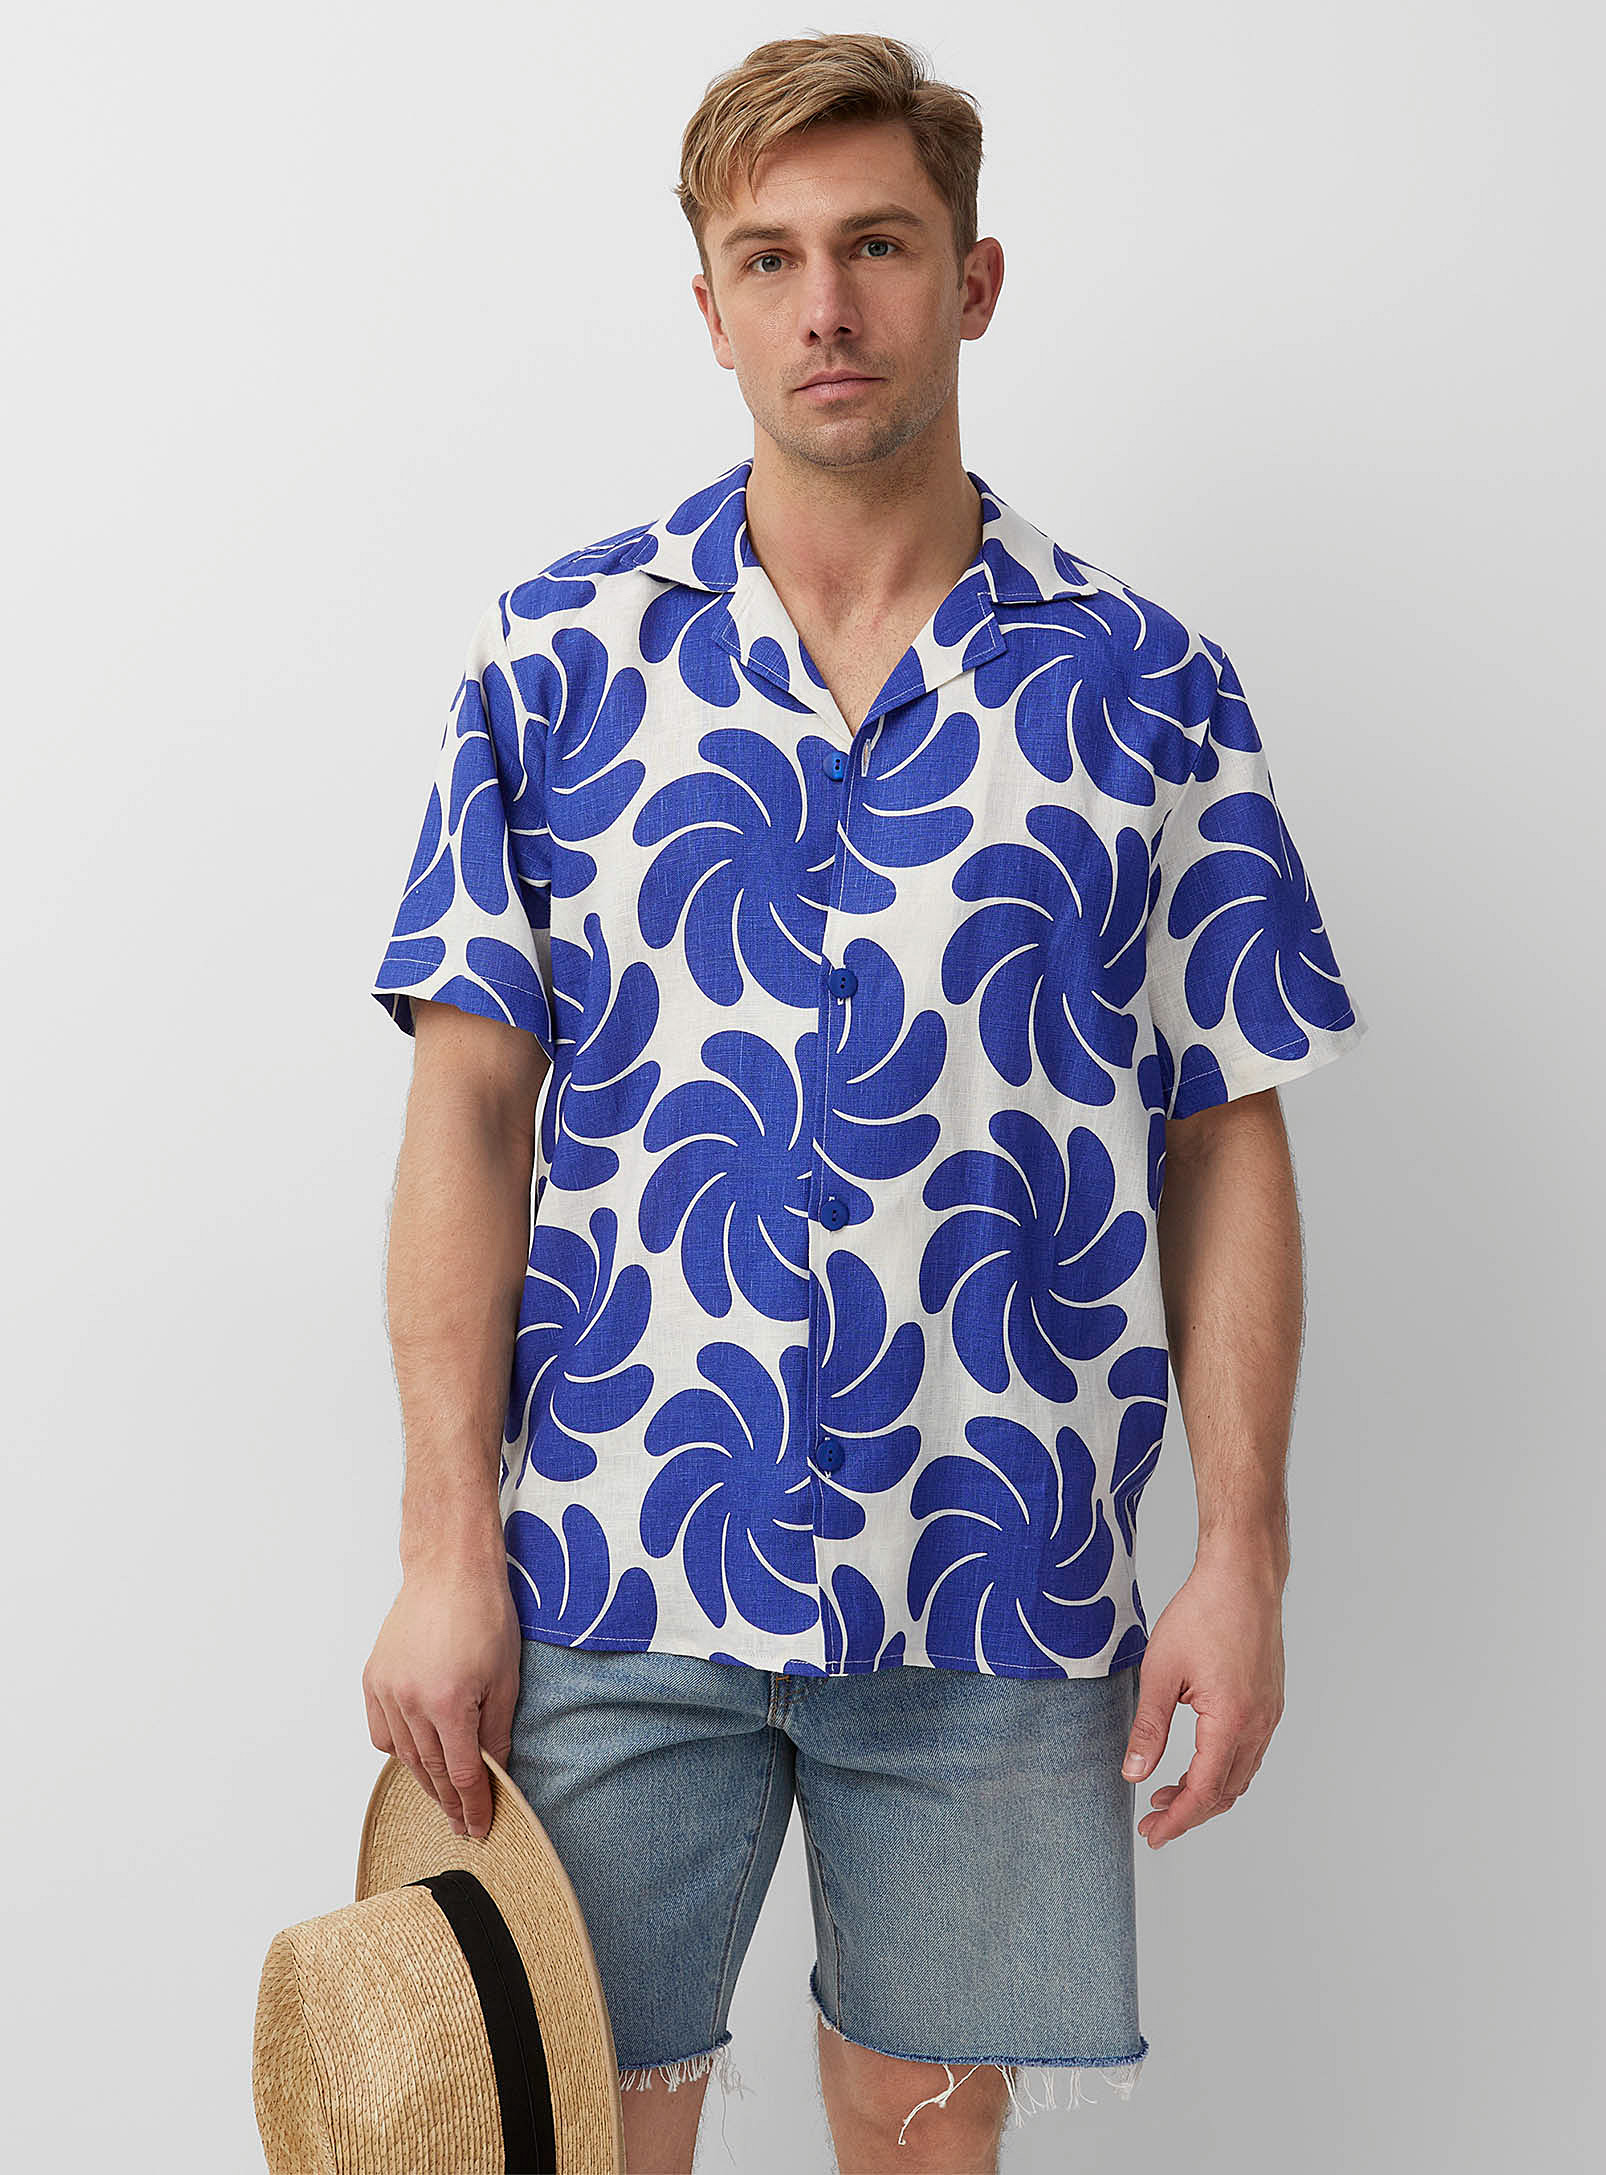 Oas - Men's Seaside camp shirt